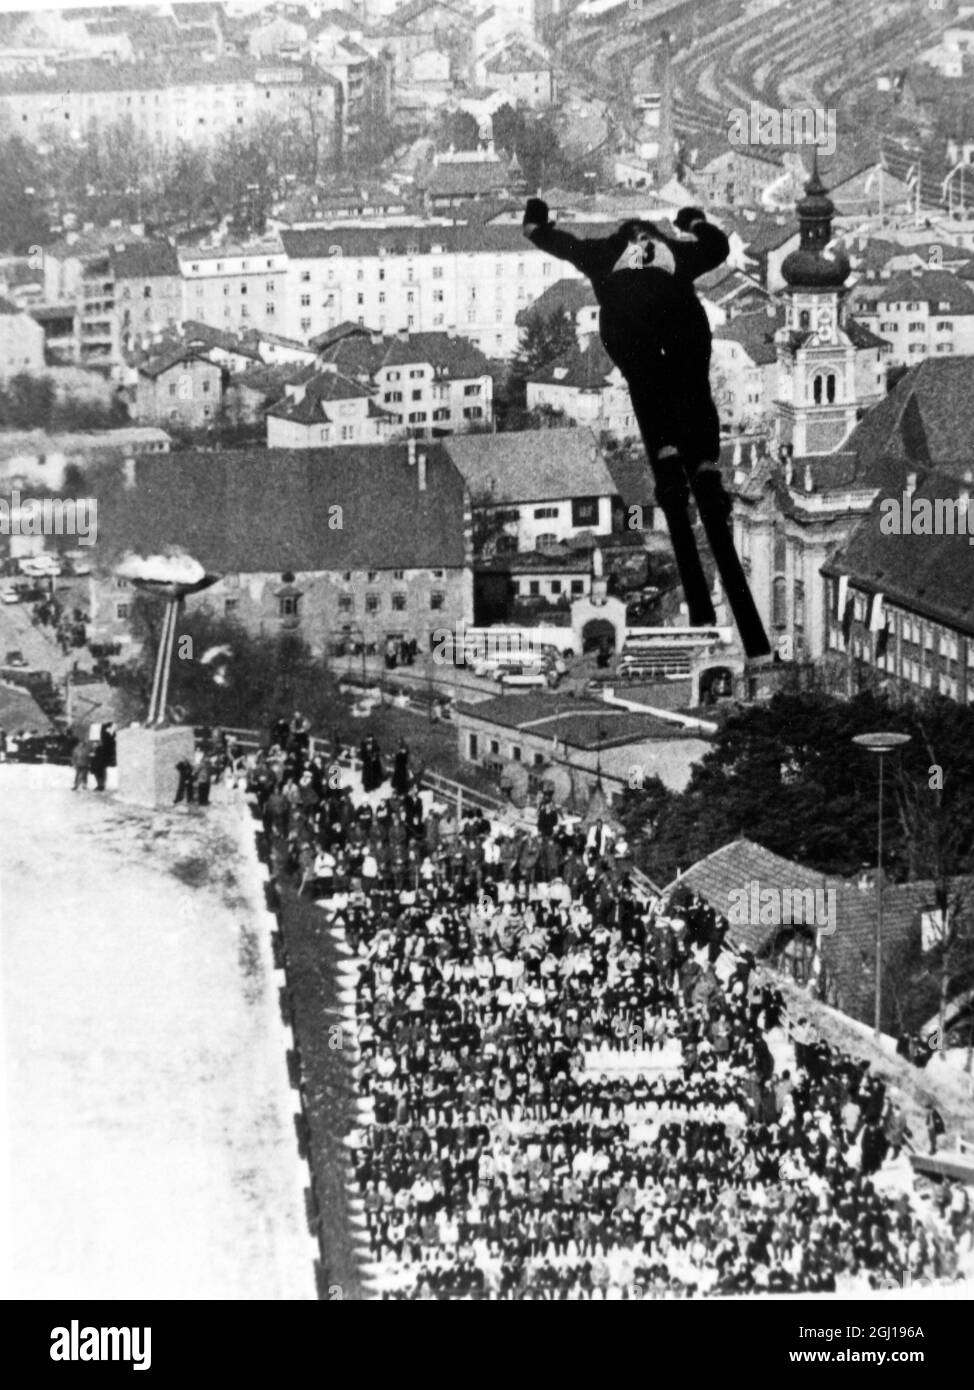 SKI JUMPER PETER ERZEN IN ACTION IN INNSBRUCK DURING WINTER OLYMPICS GAMES IN AUSTRIA - ; 9 FEBRUARY 1964 Stock Photo